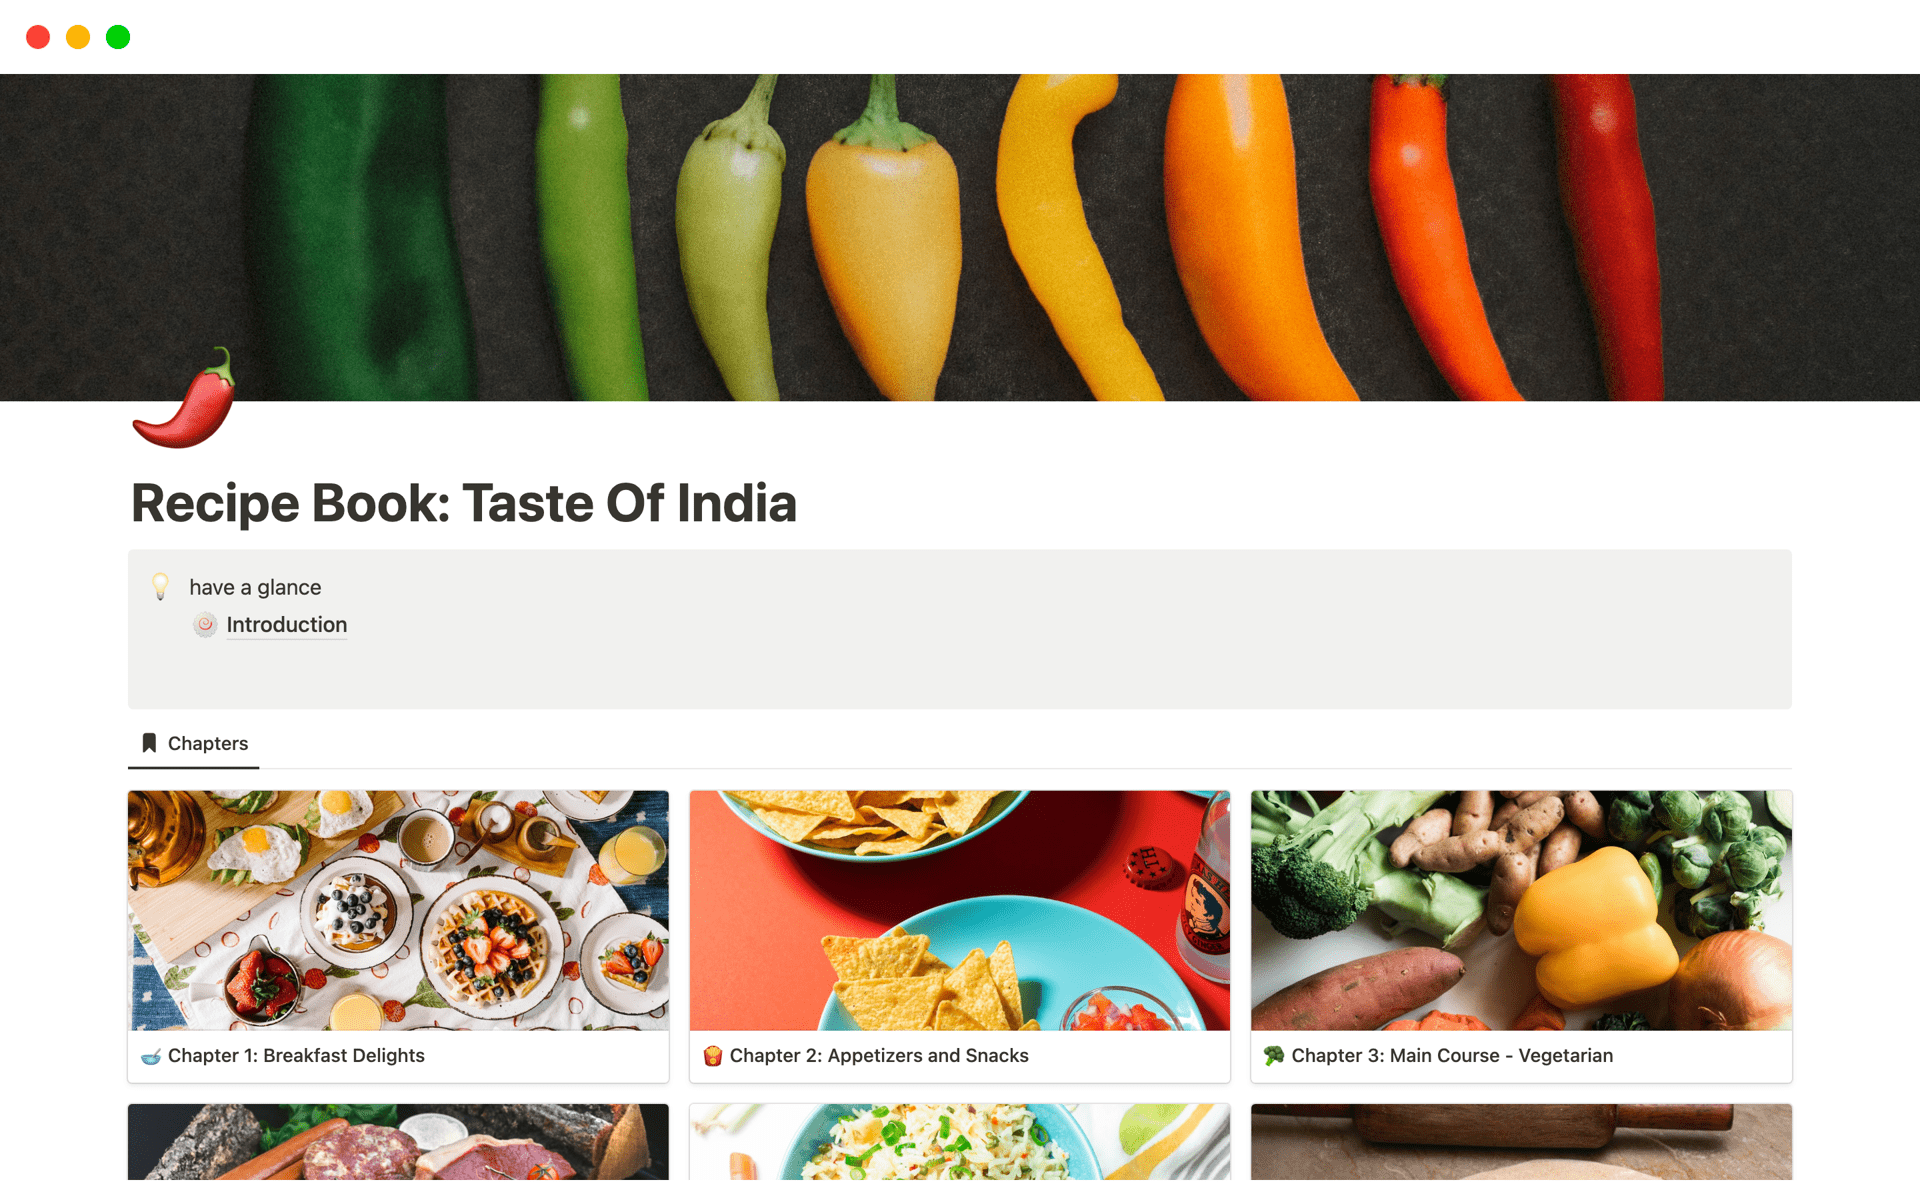 Aperçu du modèle de Recipe Book: Taste Of India